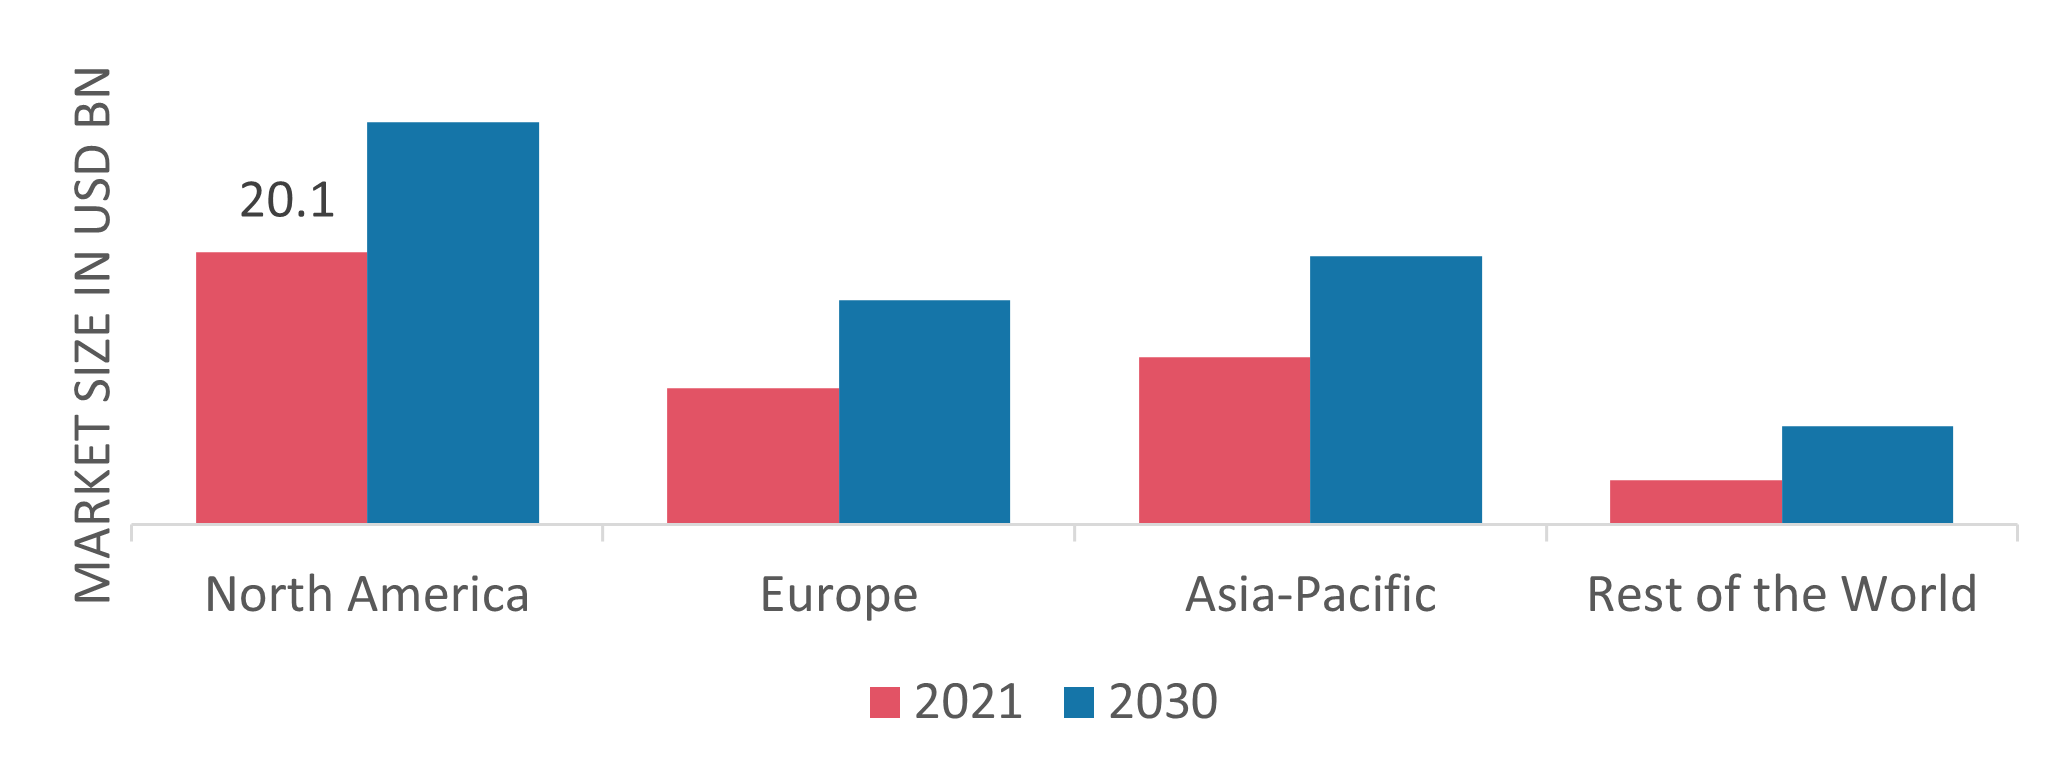 Pumps Market Share By Region 2021 (%)